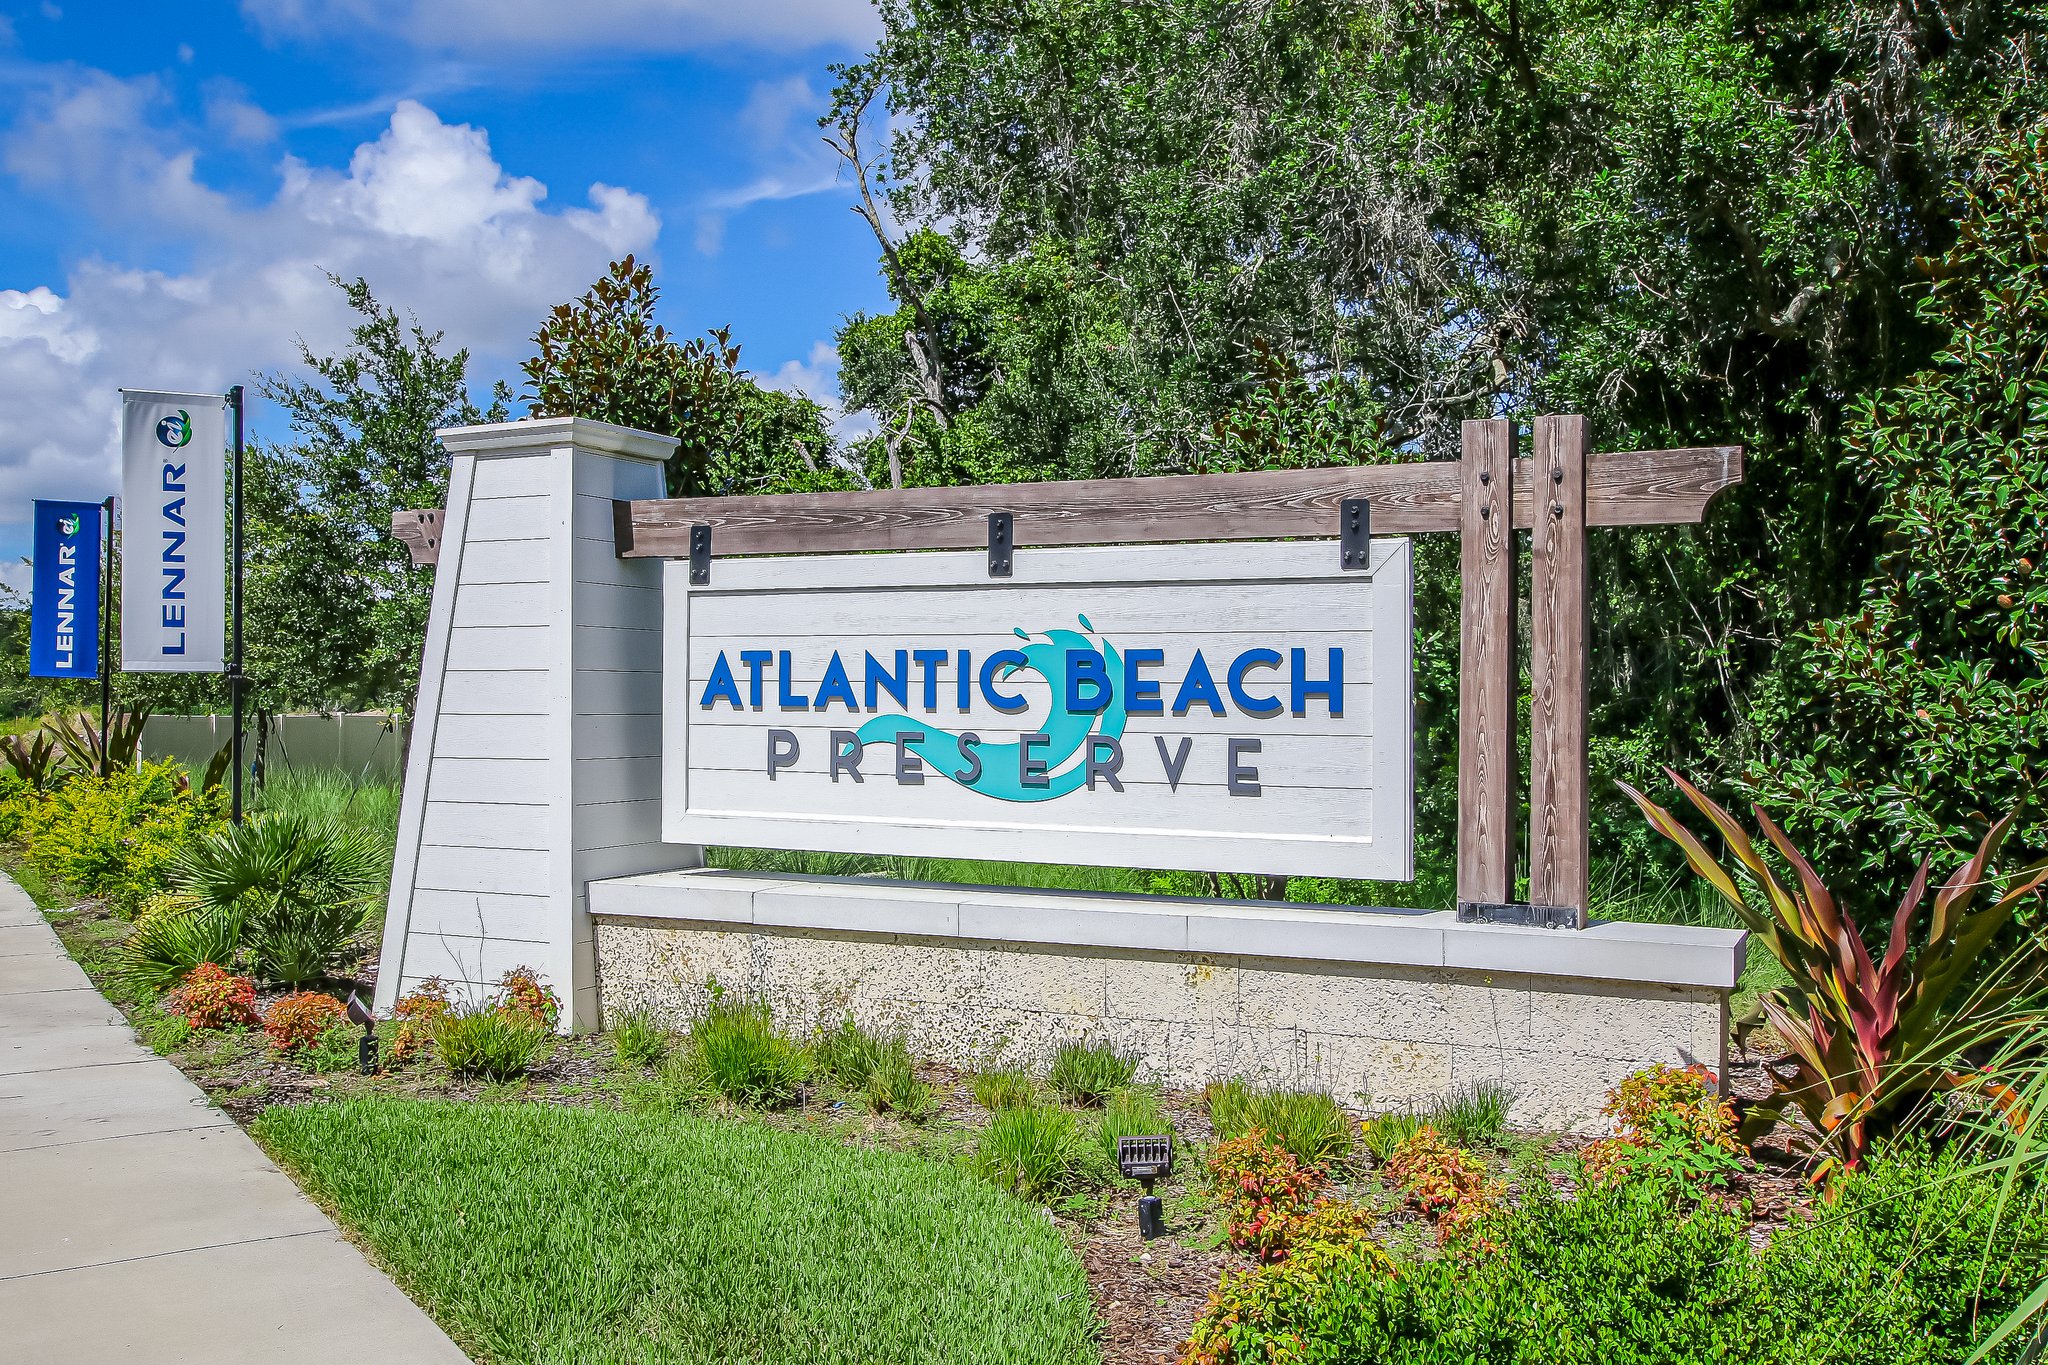 Atlantic Beach Preserve